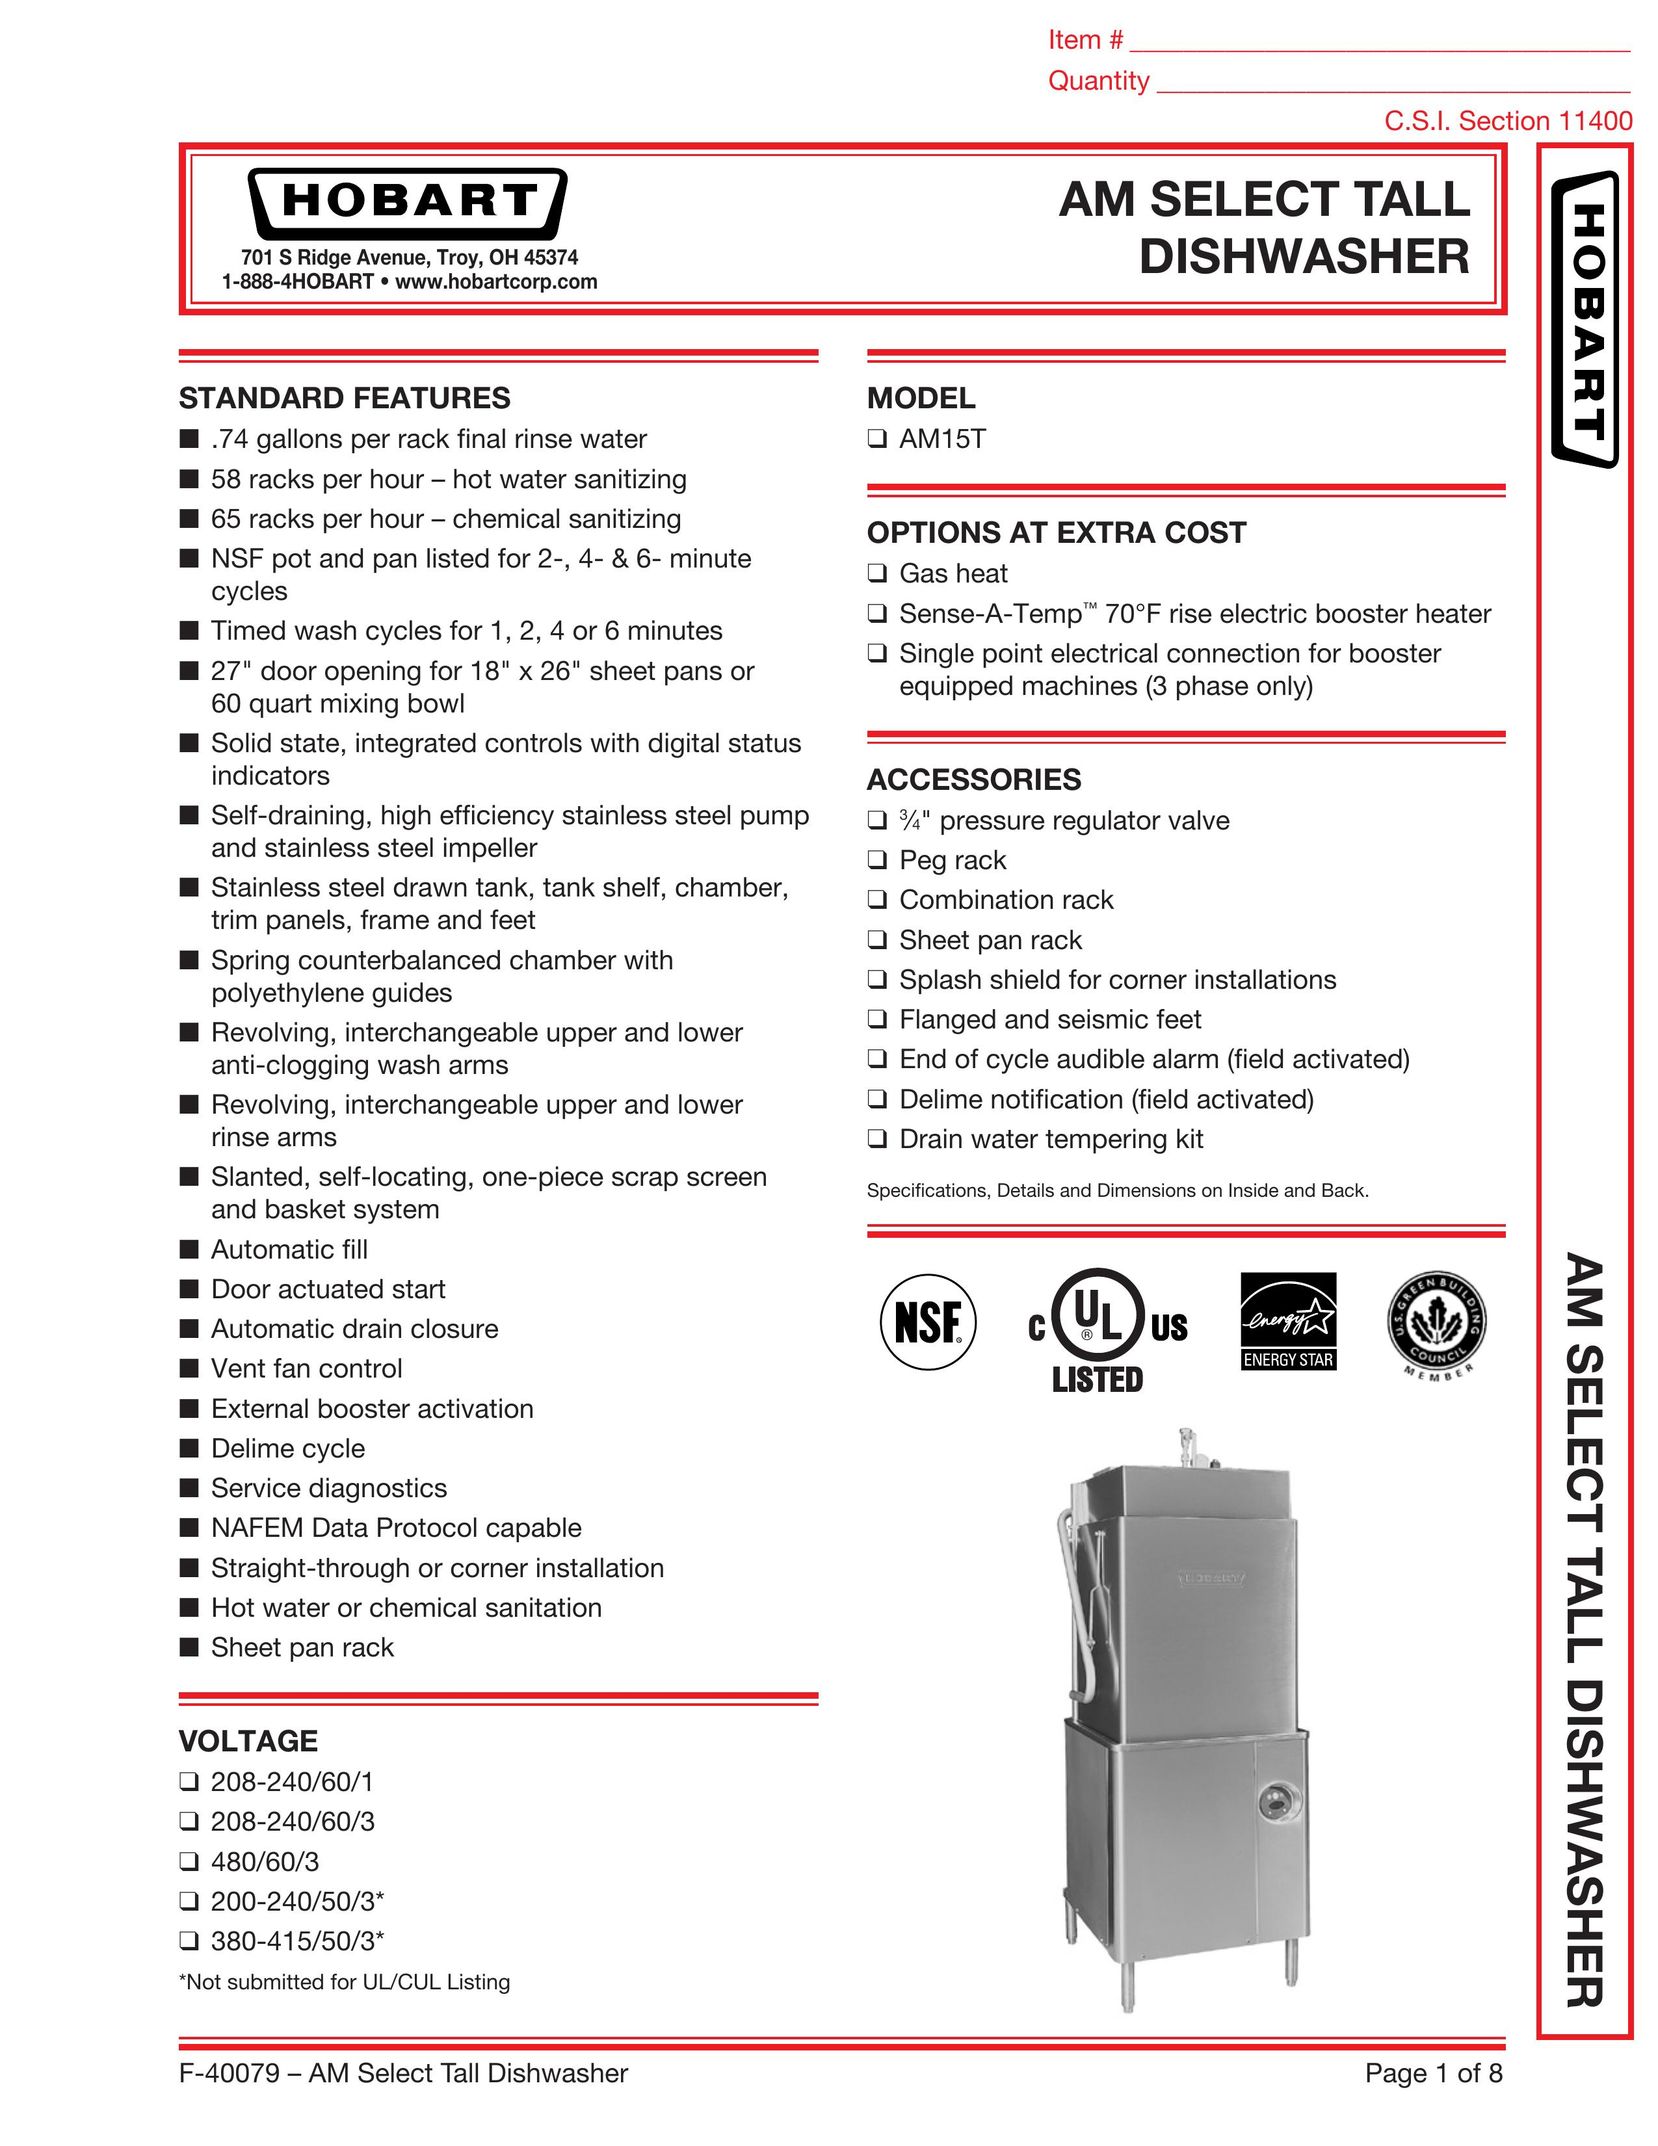 Hobart 380-415/50/3* Dishwasher User Manual